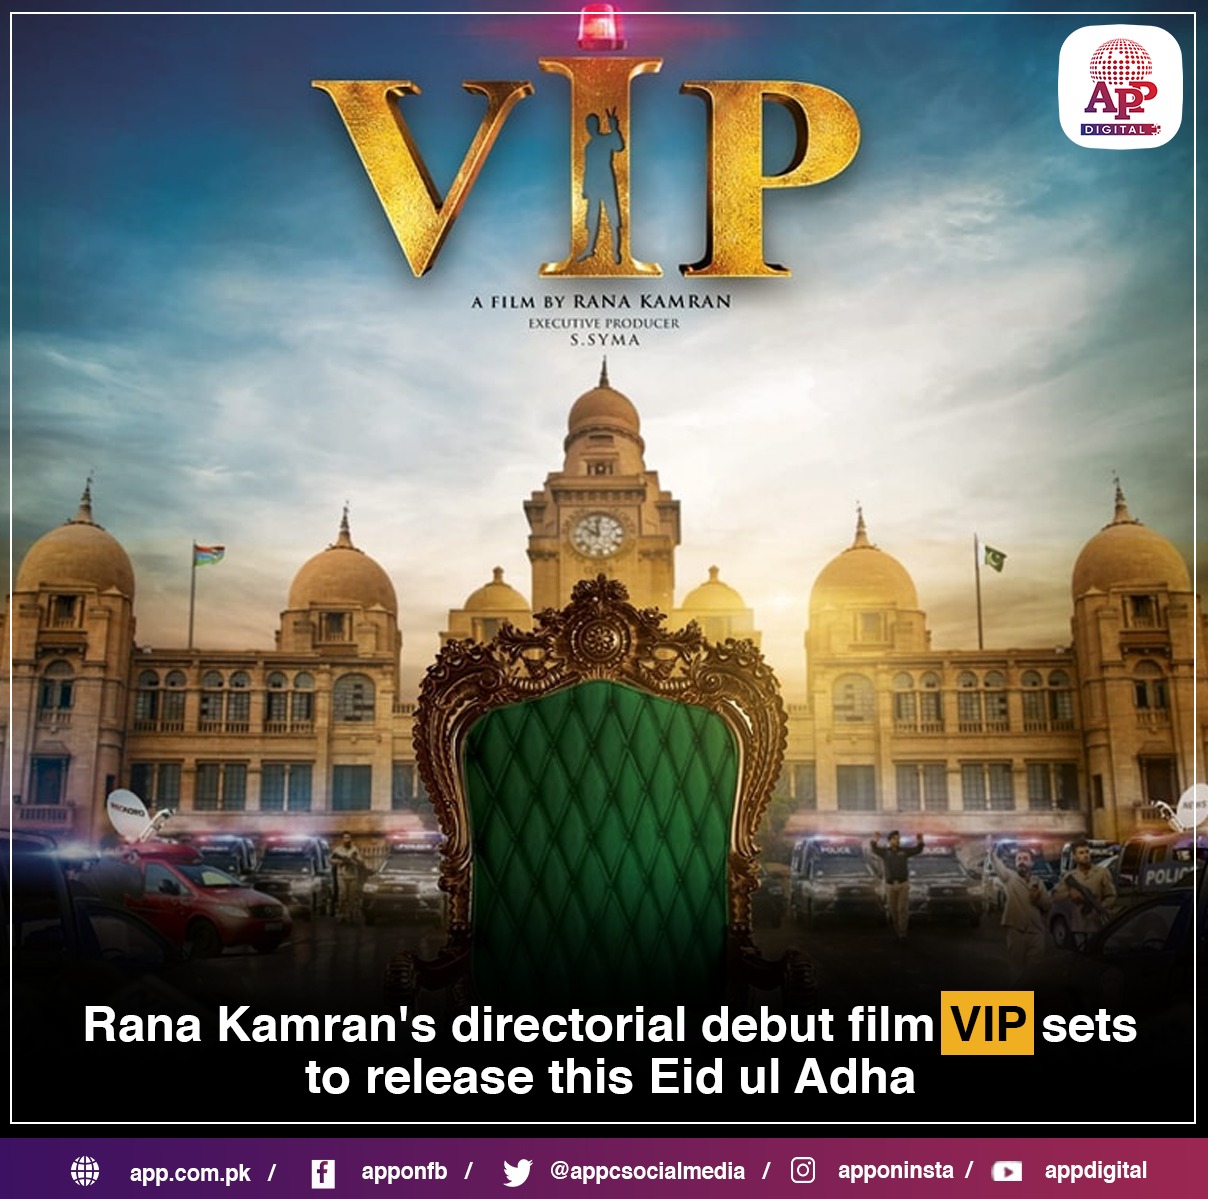 Rana Kamran's directorial debut film "VIP" sets to release this Eid ul Adha